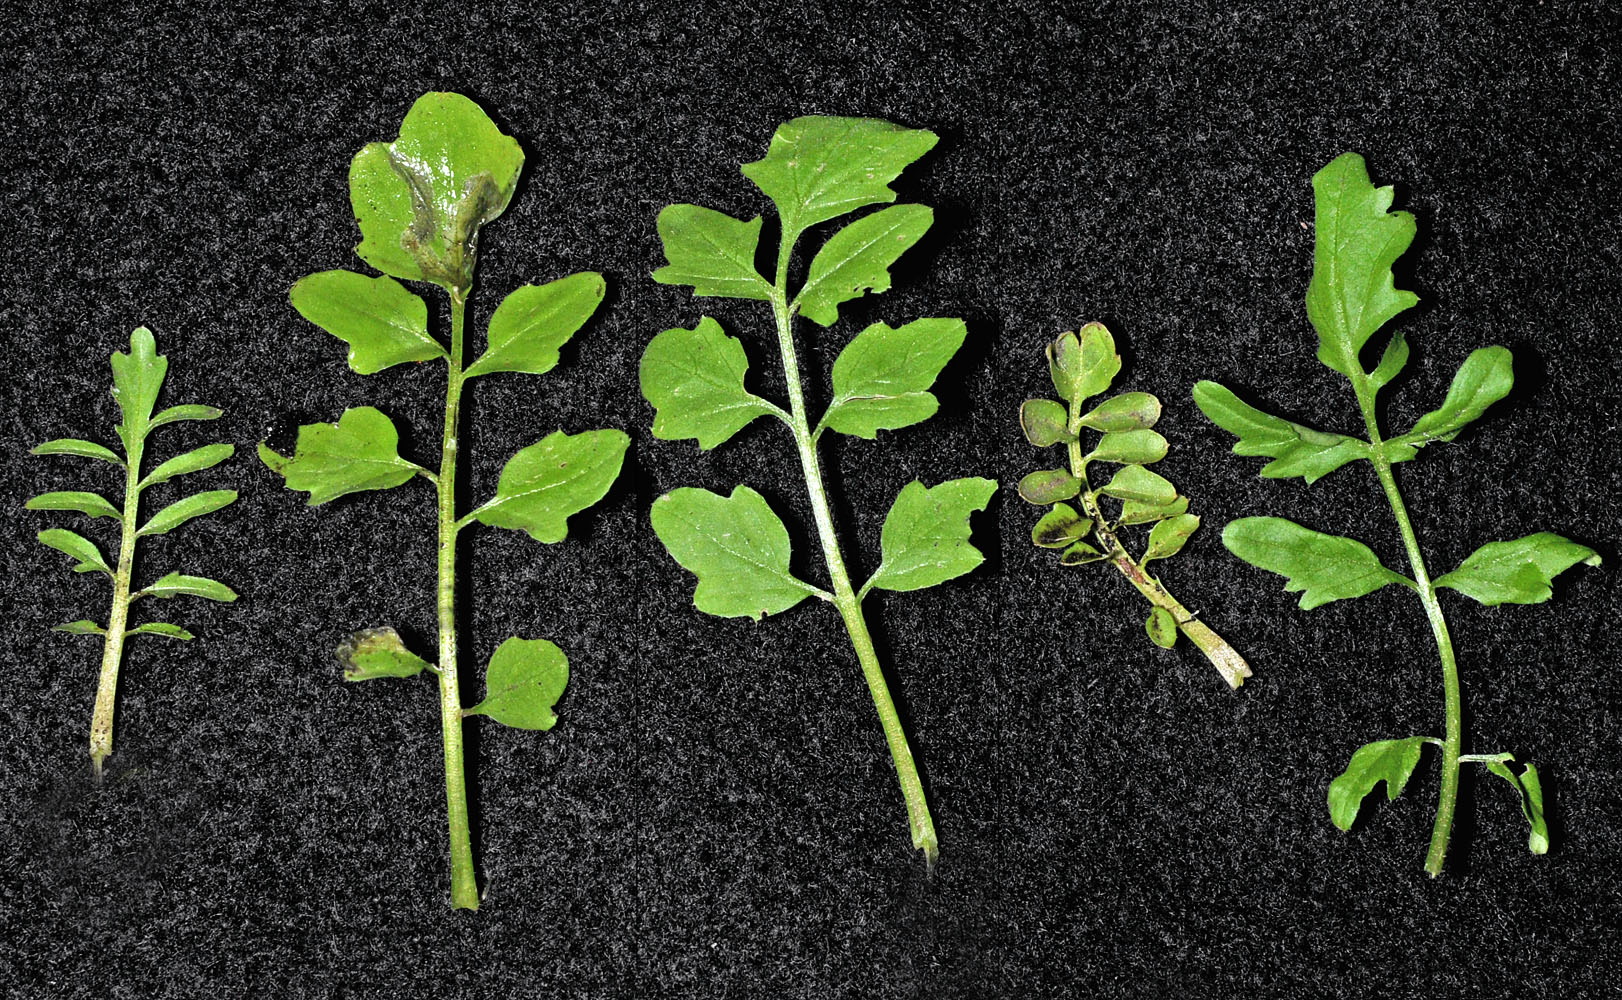 Flora of Eastern Washington Image: Cardamine pensylvanica